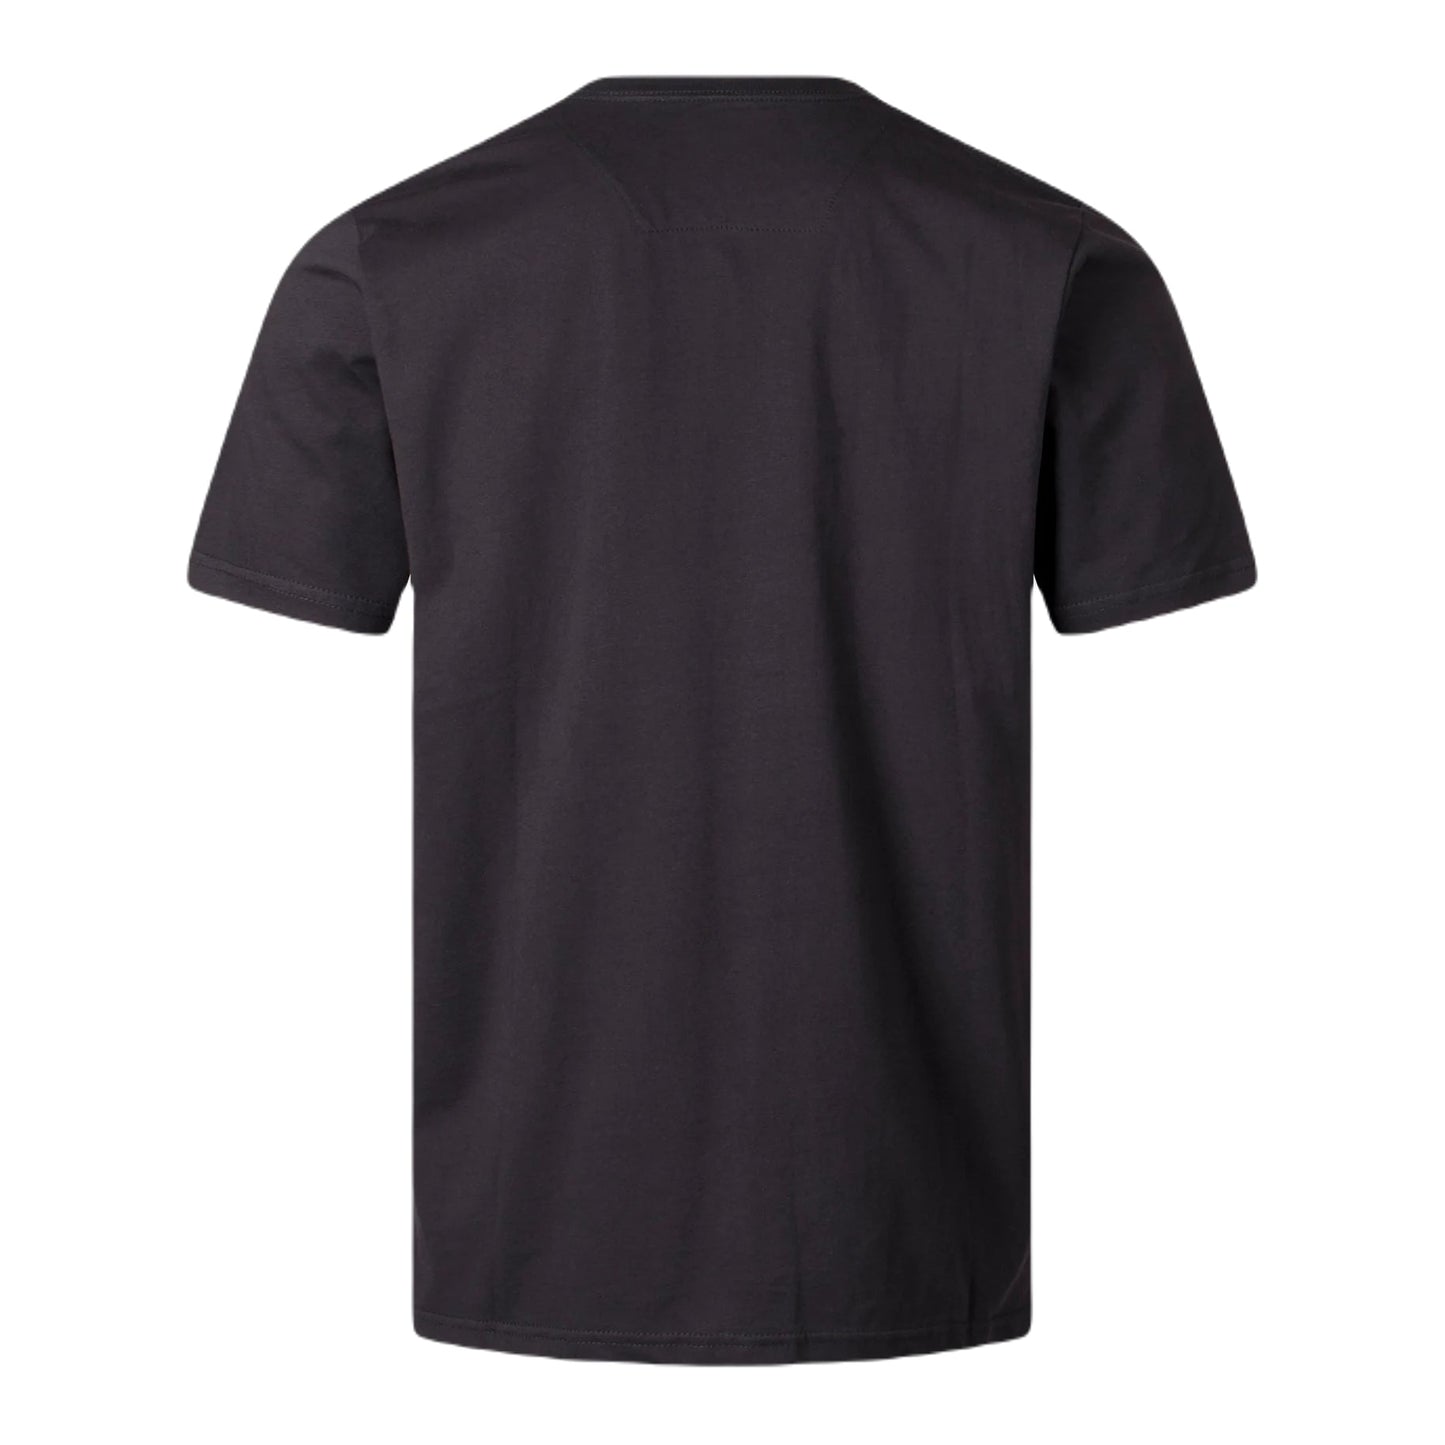 Marshall Artist Injection T-Shirt - Black - Escape Menswear